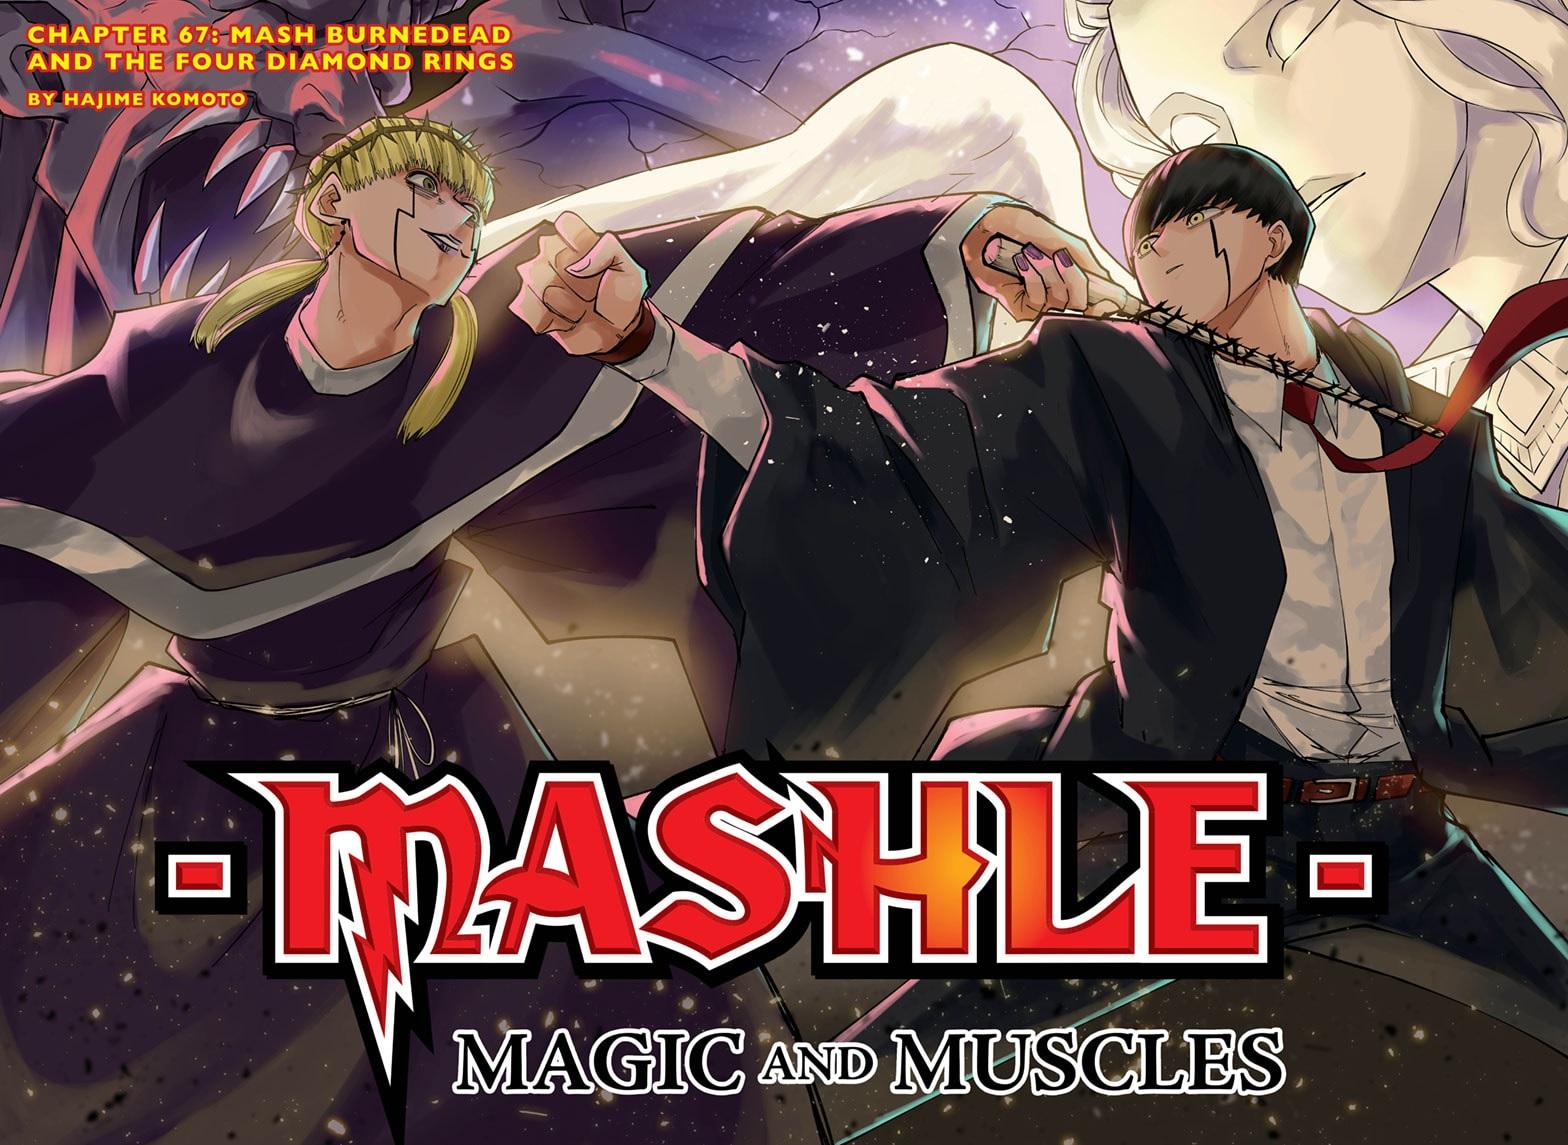 Mashle Magic and Muscles ร ยธโ€ขร ยธยญร ยธโขร ยธโ€”ร ยธยตร ยนห67 (2)